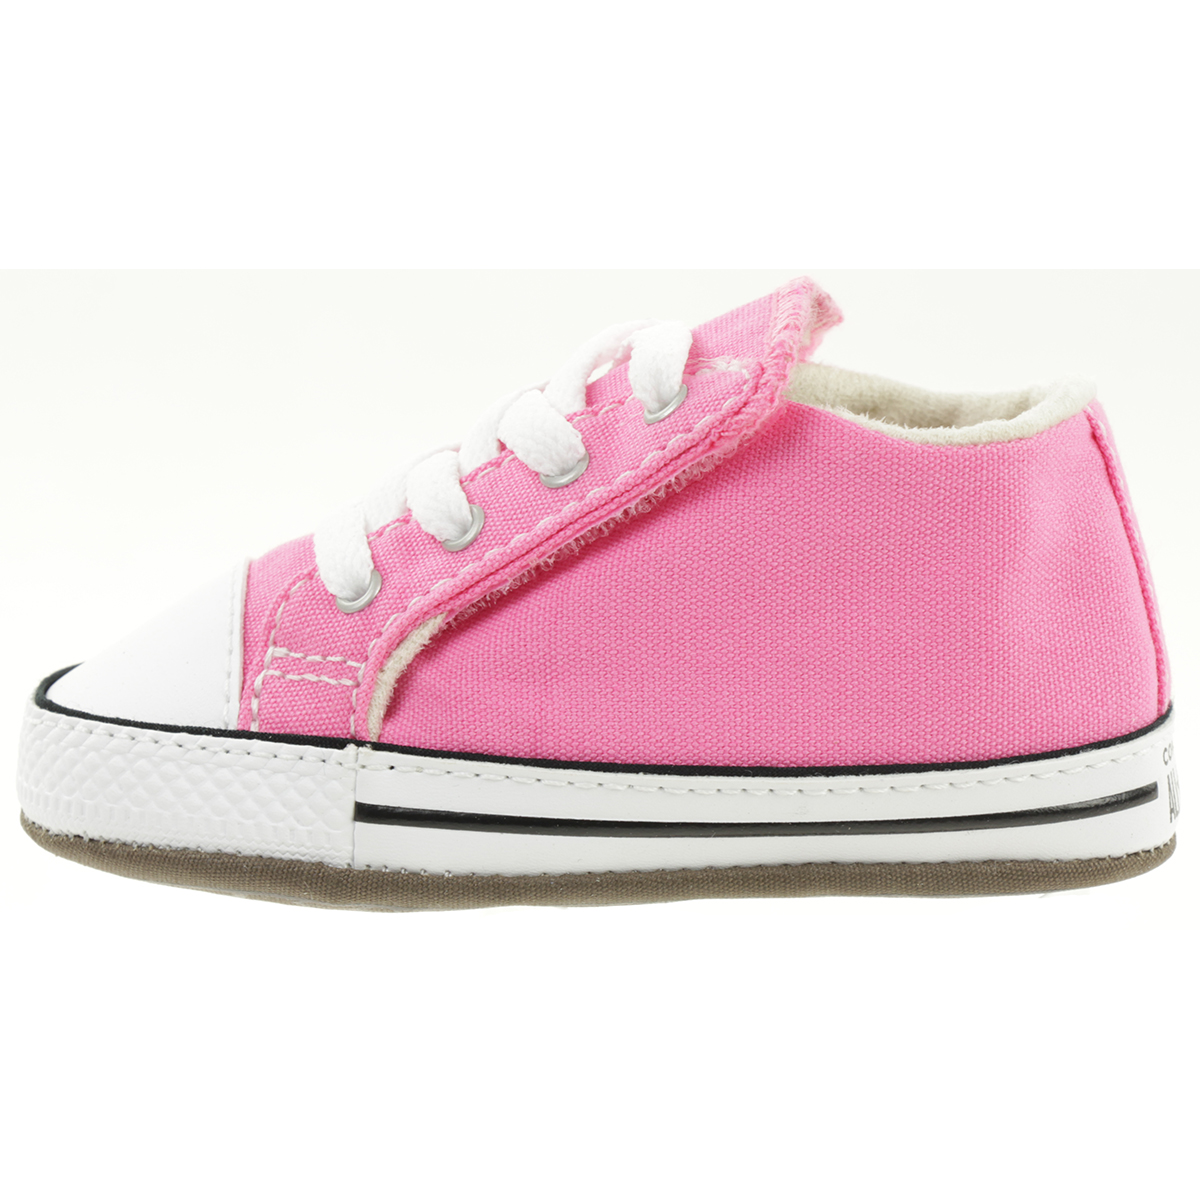 Converse CTAS Cribster Mid Kleinkinder Low Top Sneaker 865160C Pink